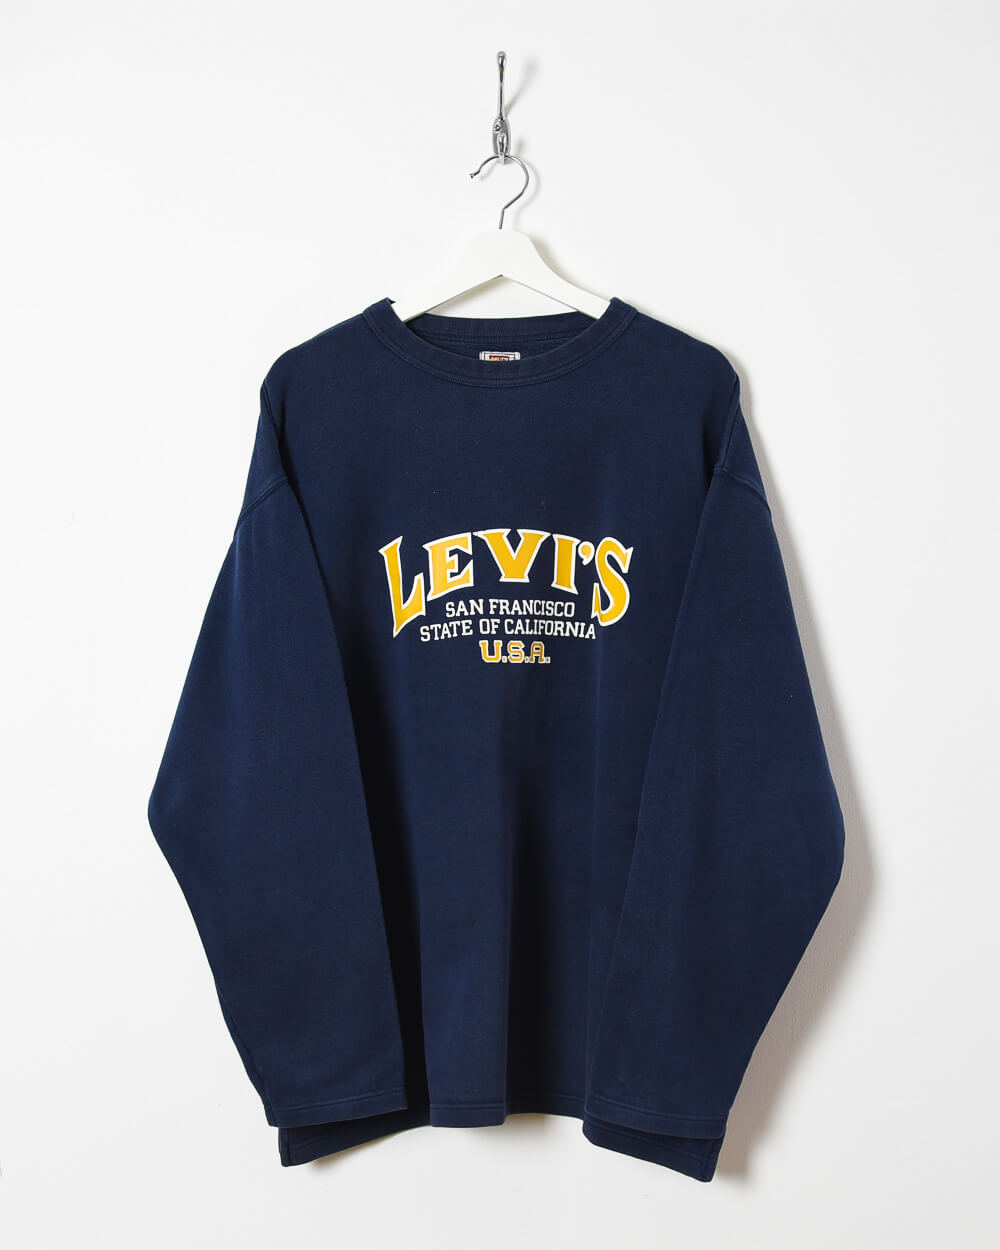 Levi's San Francisco State of California USA Sweatshirt - X-Large - Domno Vintage 90s, 80s, 00s Retro and Vintage Clothing 